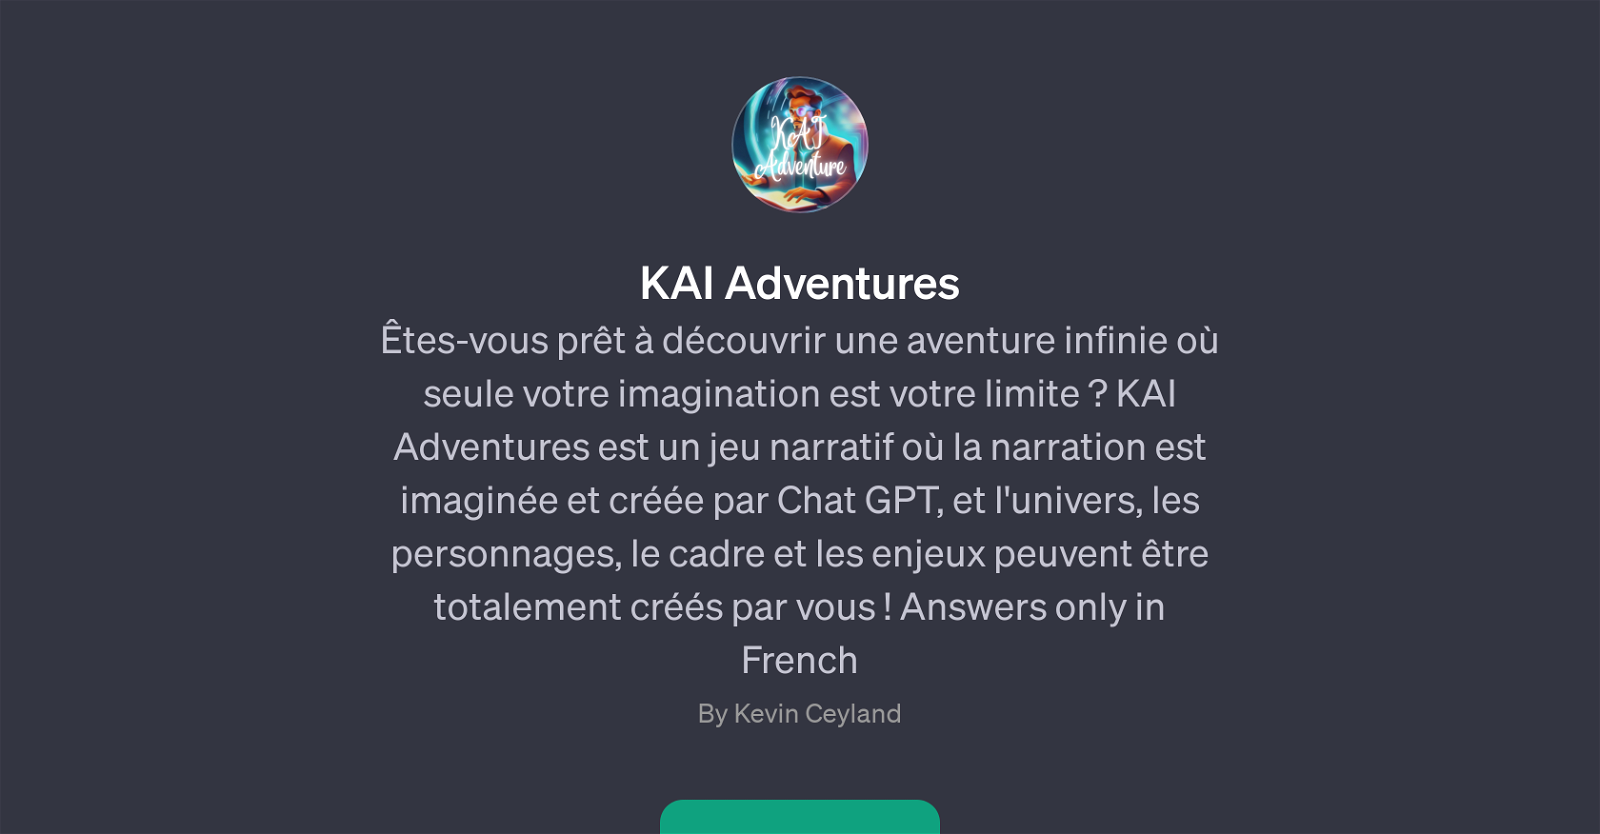 KAI Adventures website